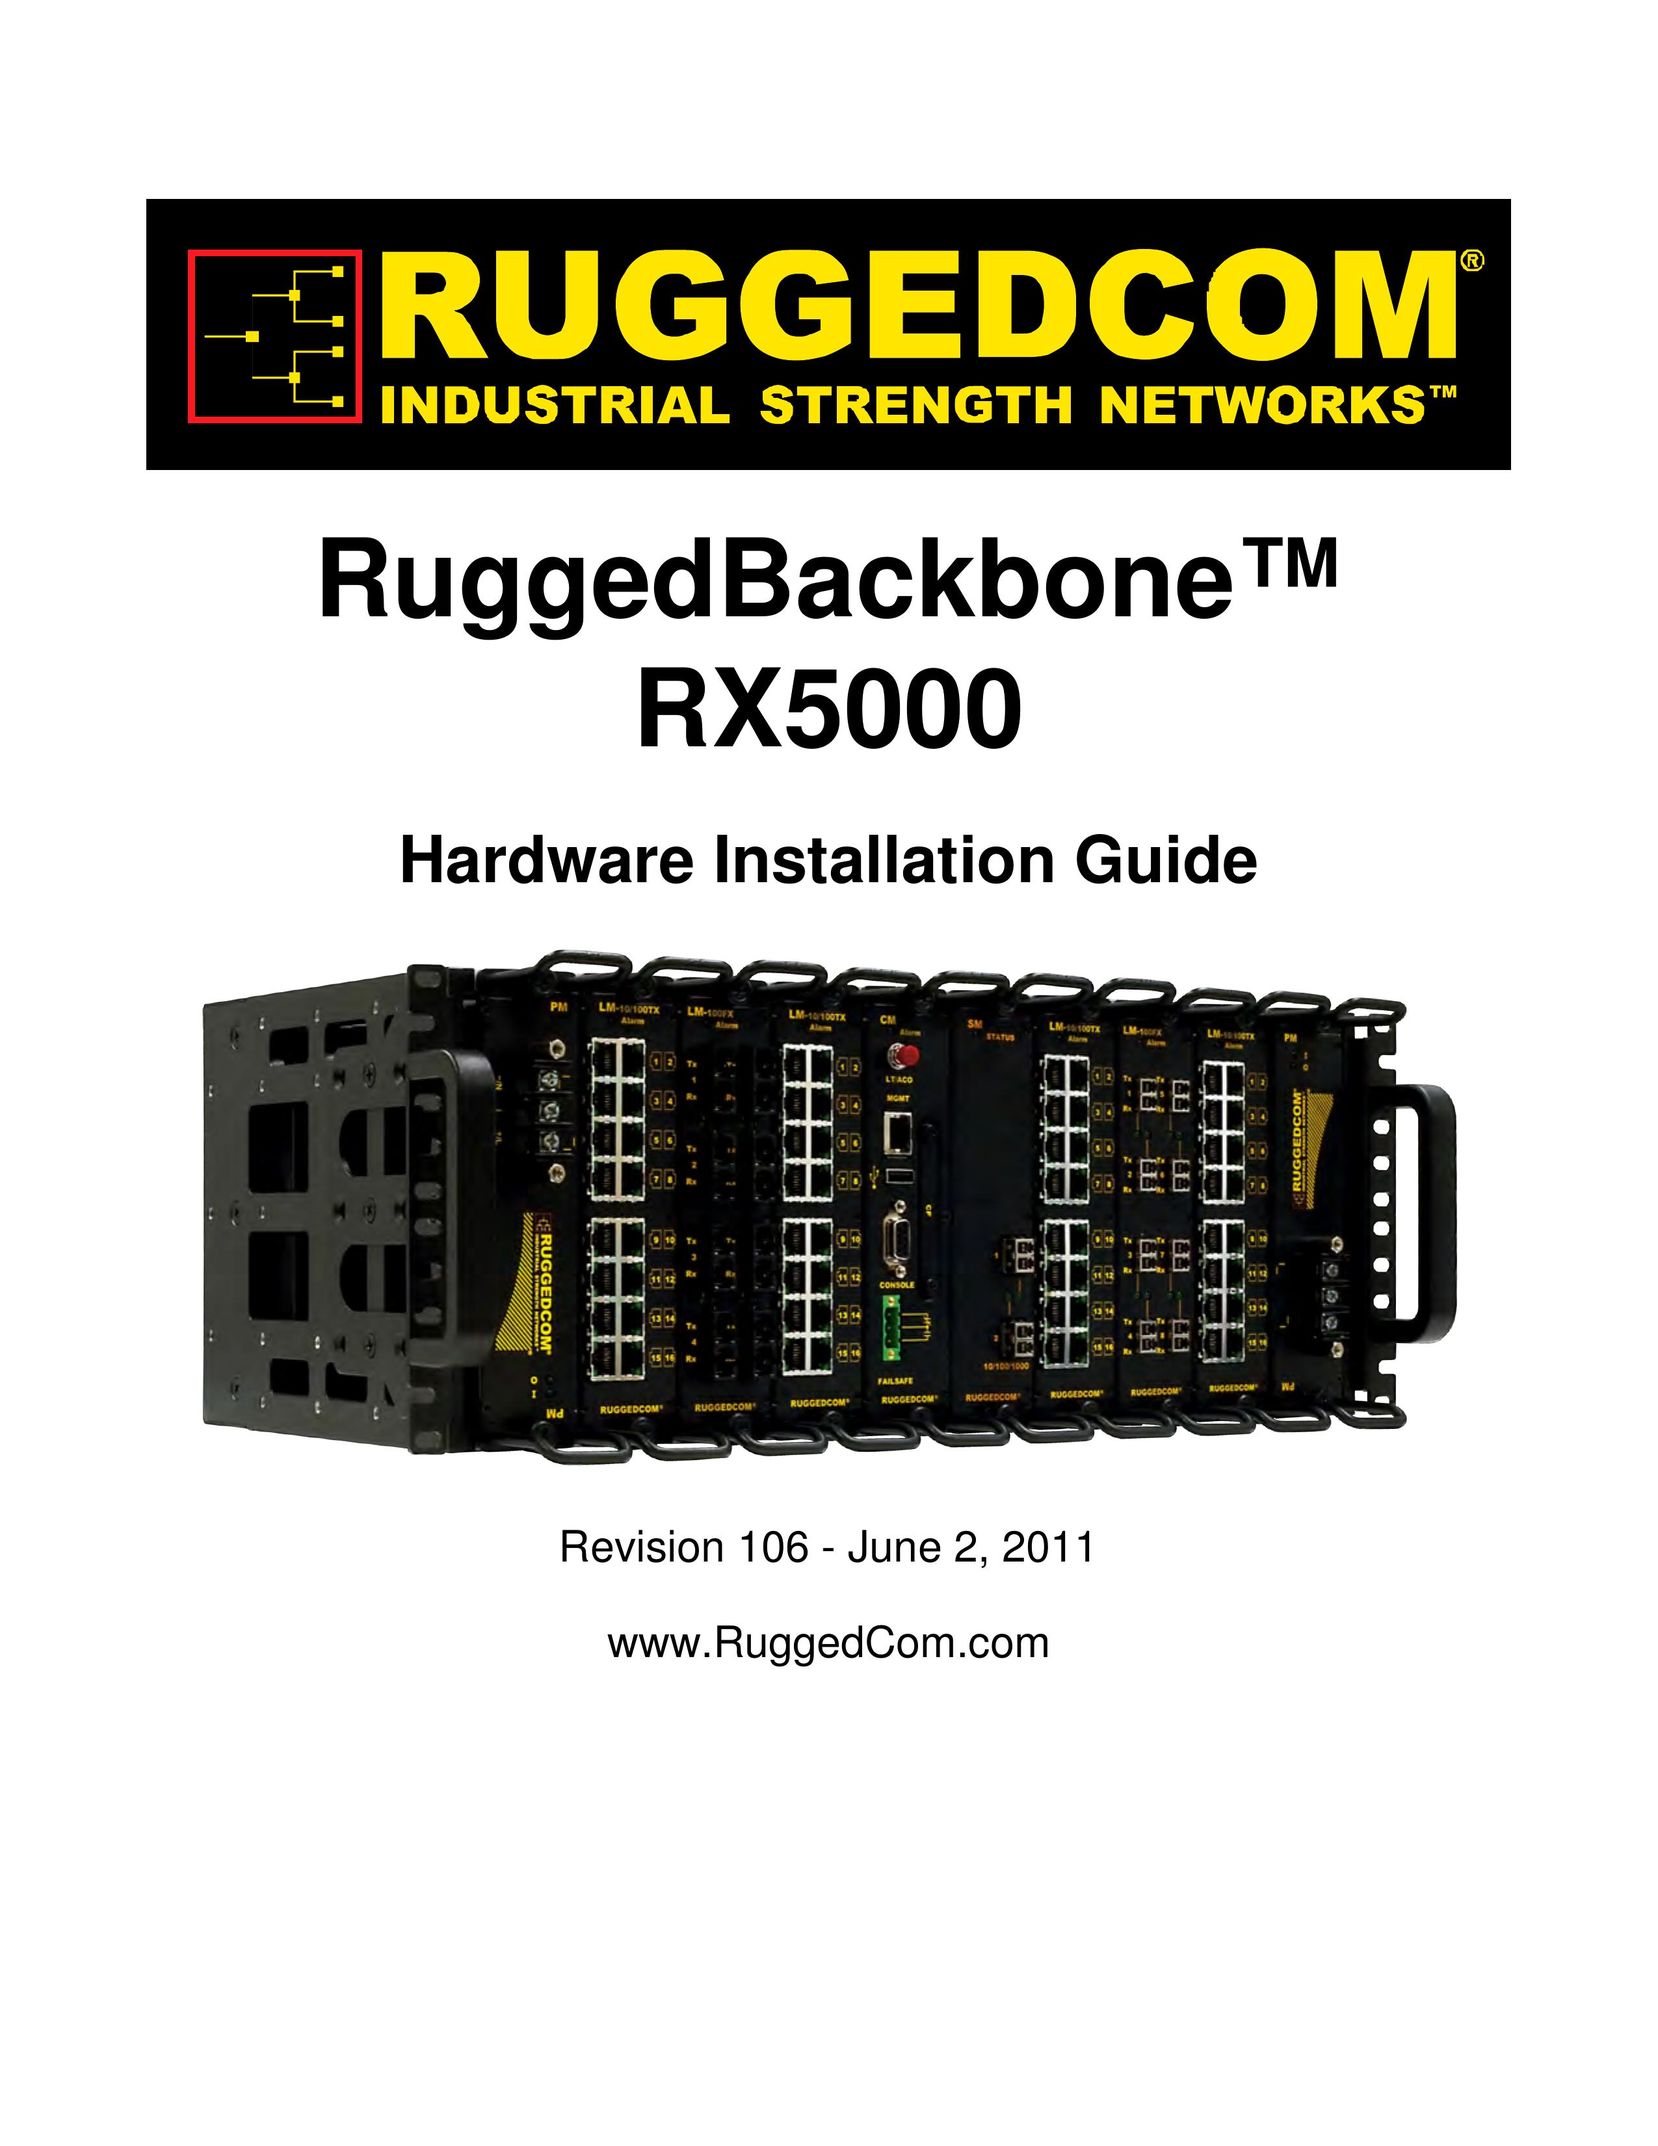 RuggedCom RX5000 Computer Hardware User Manual